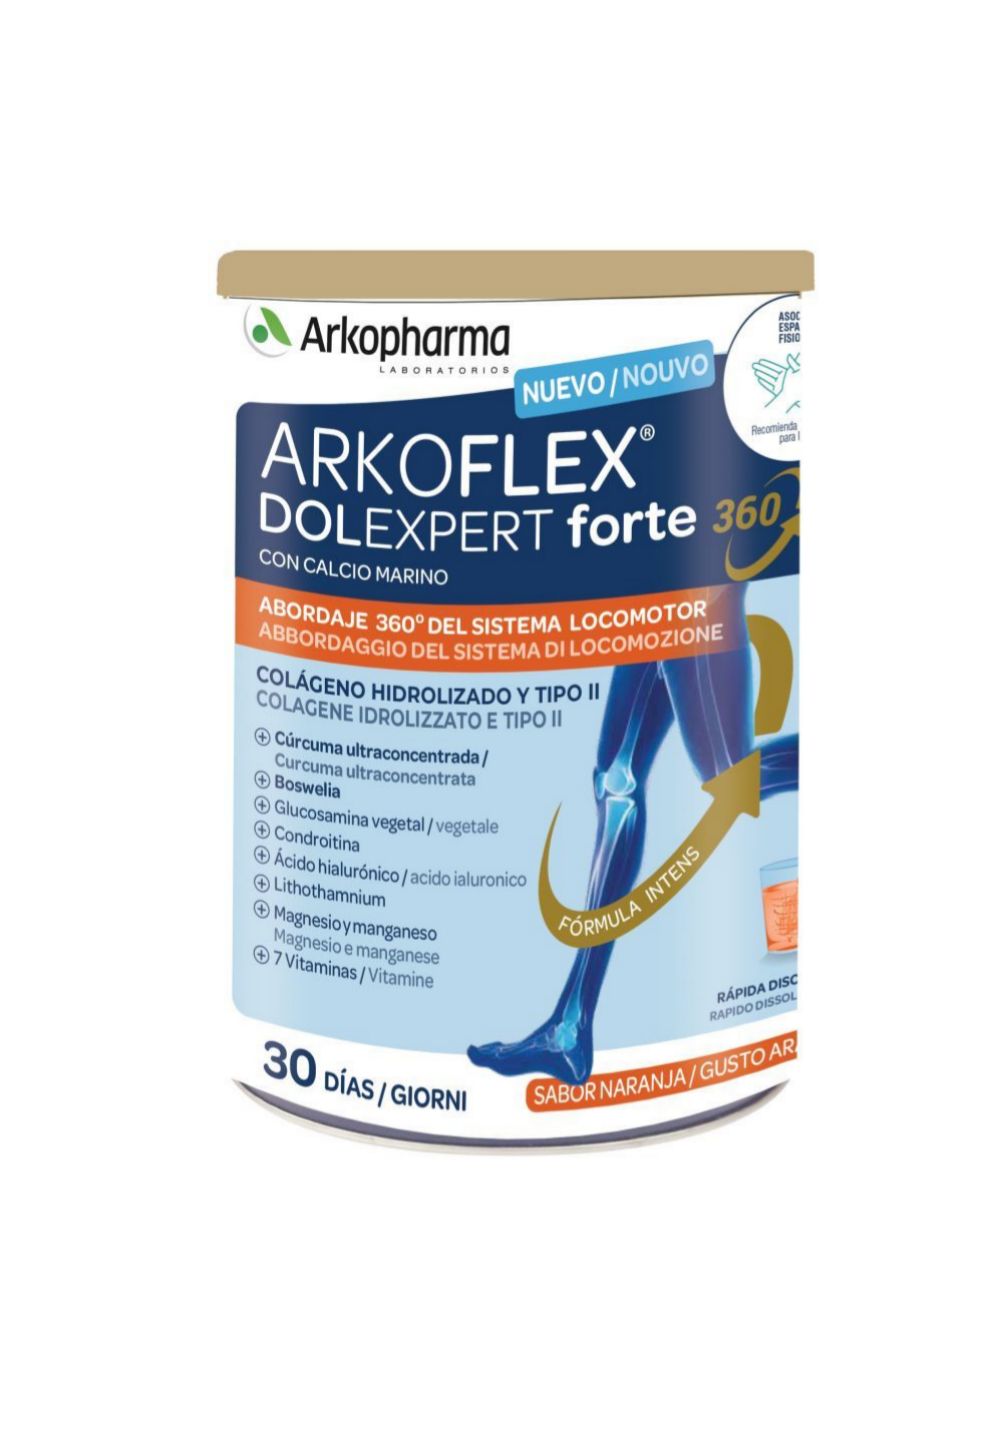 Arkoflex forte, Arkopharma (27,90 euros)